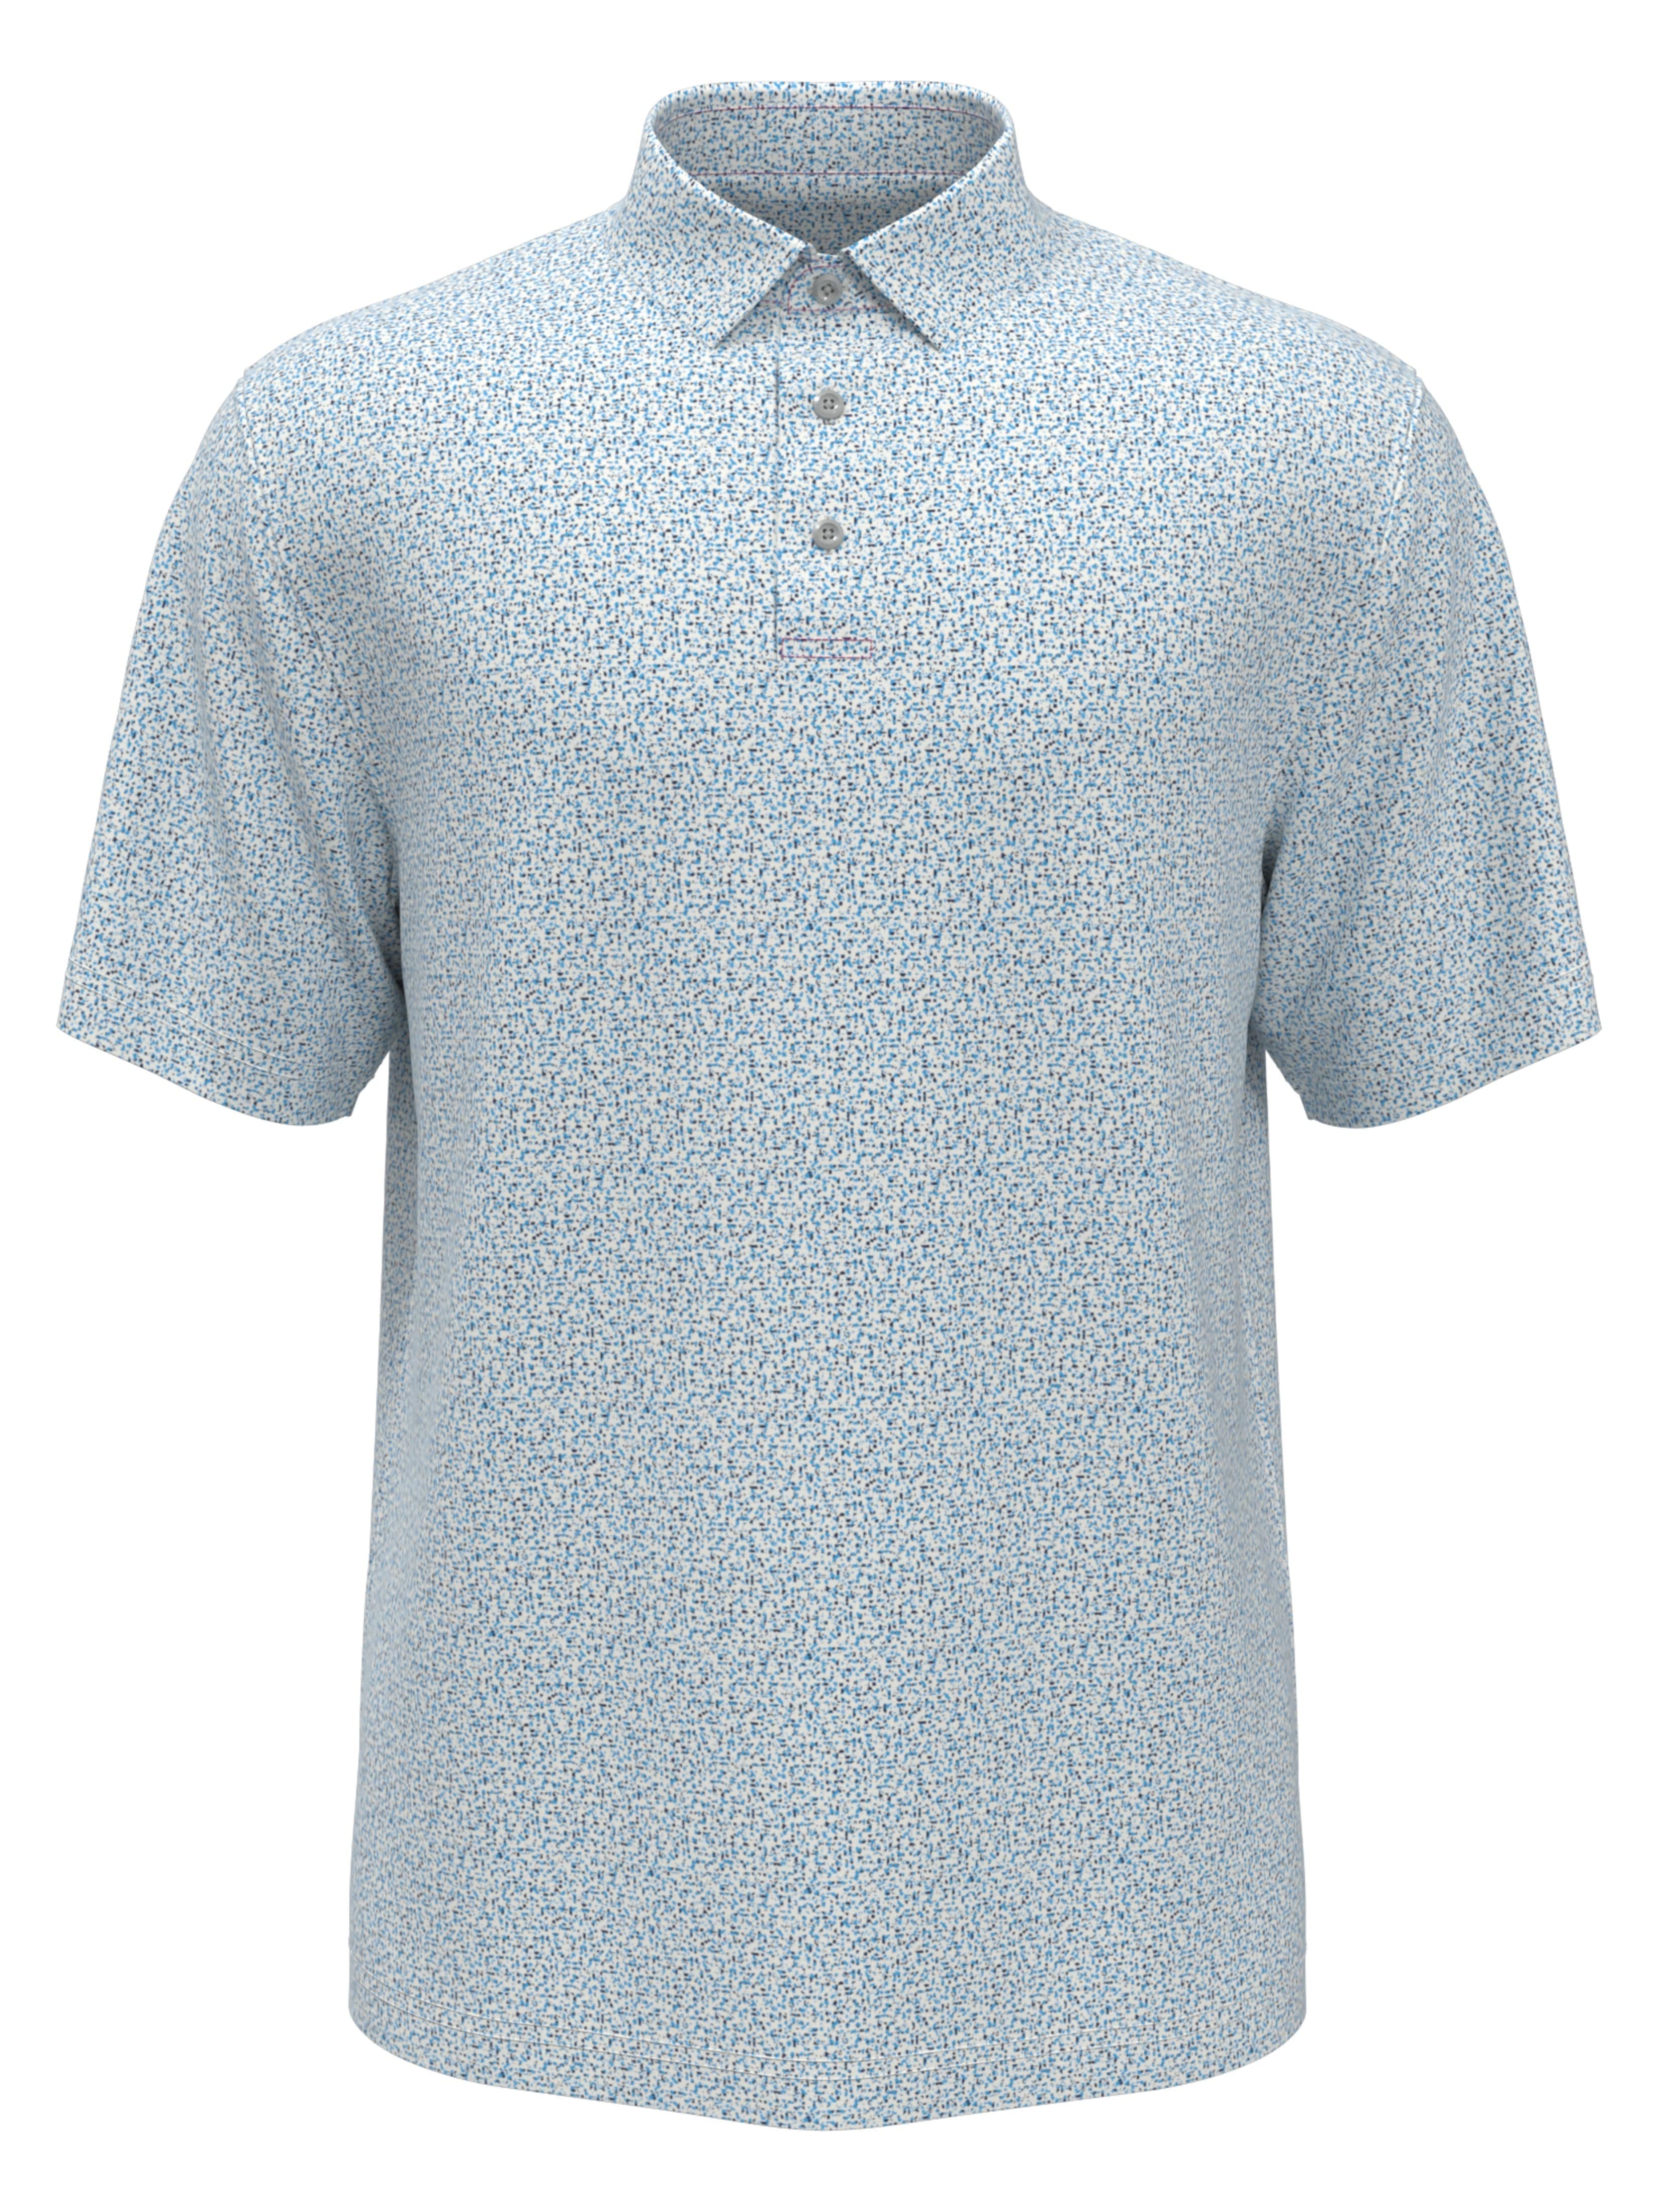 PGA TOUR Apparel Boys Micro Geo Printed Golf Polo Shirt, Size Medium, White Blue, 100% Polyester | Golf Apparel Shop